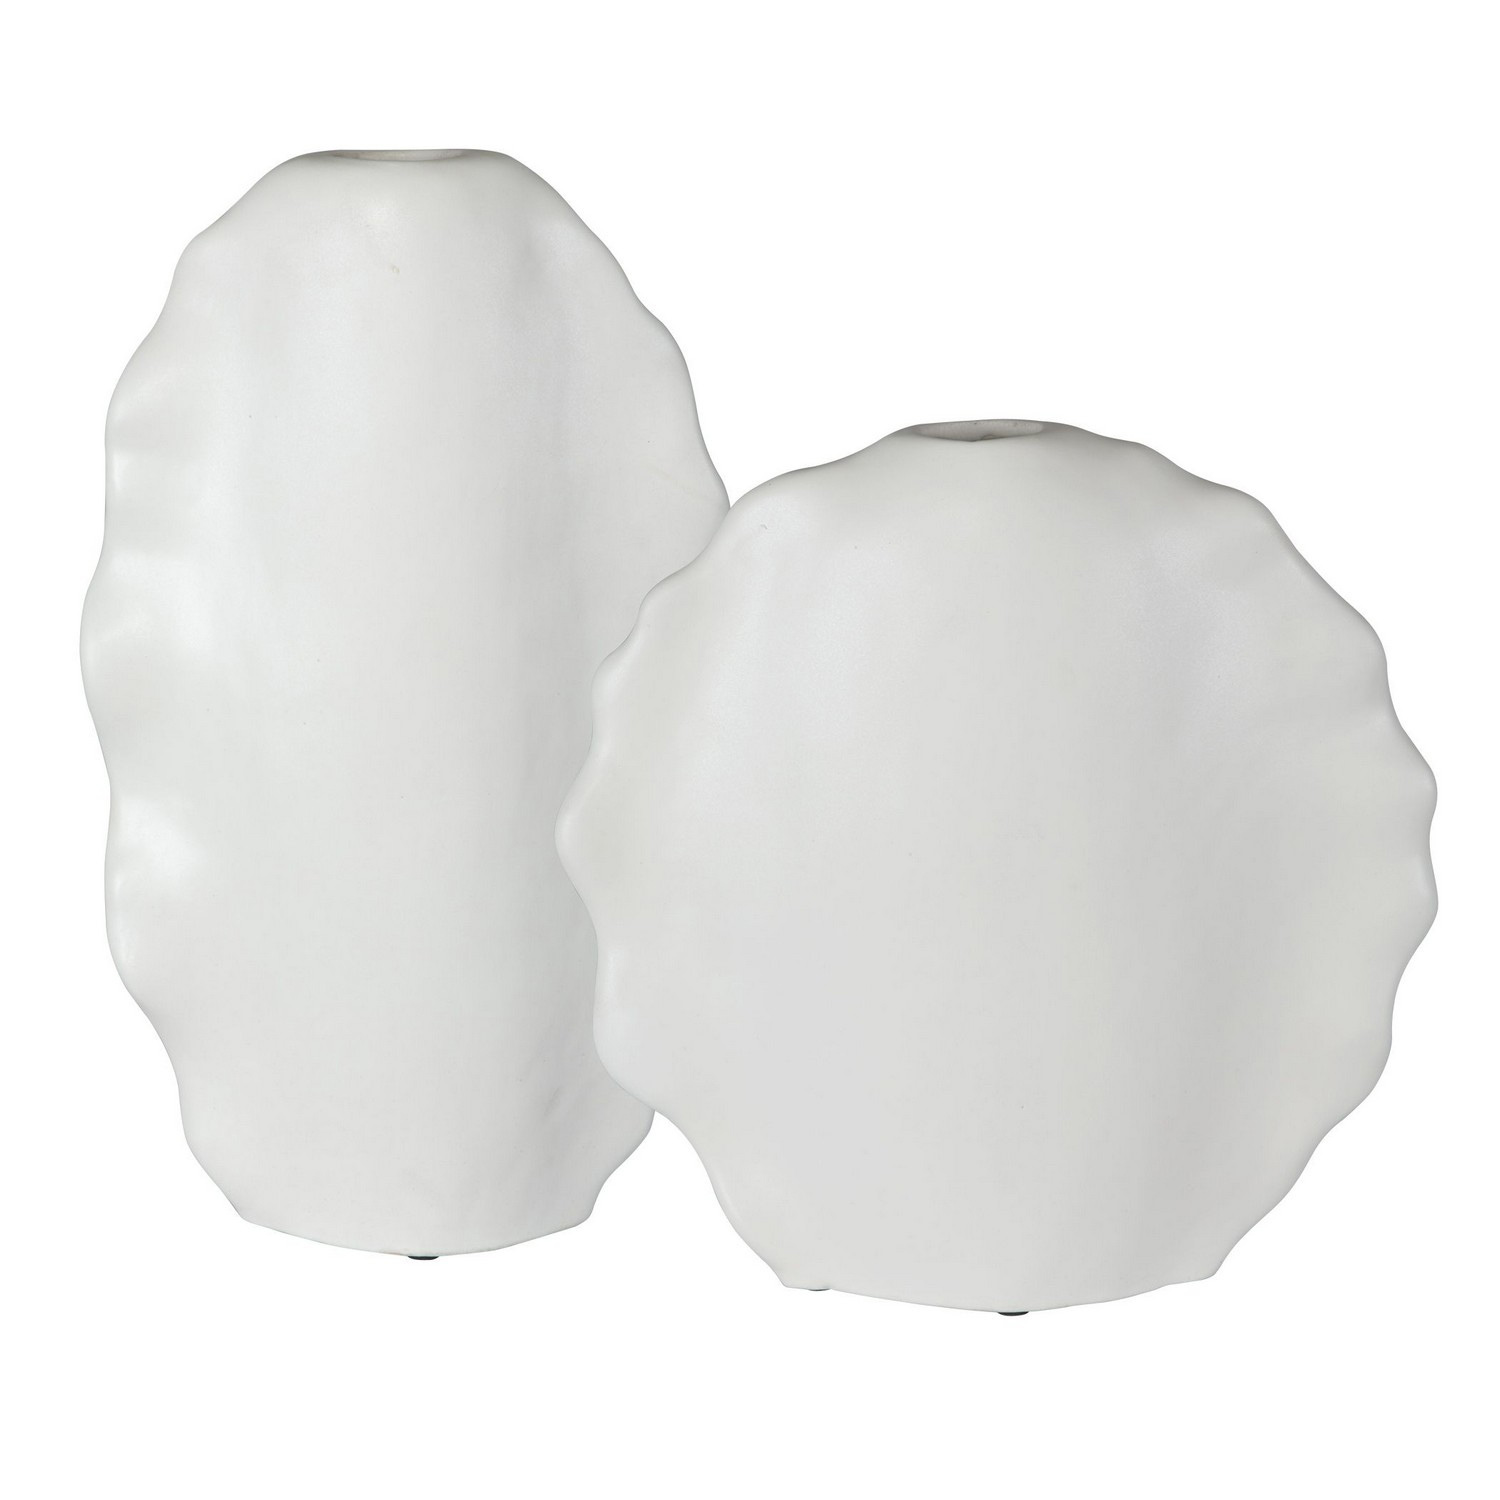 Uttermost Ruffled Feathers Modern Vases - Set of 2 - White